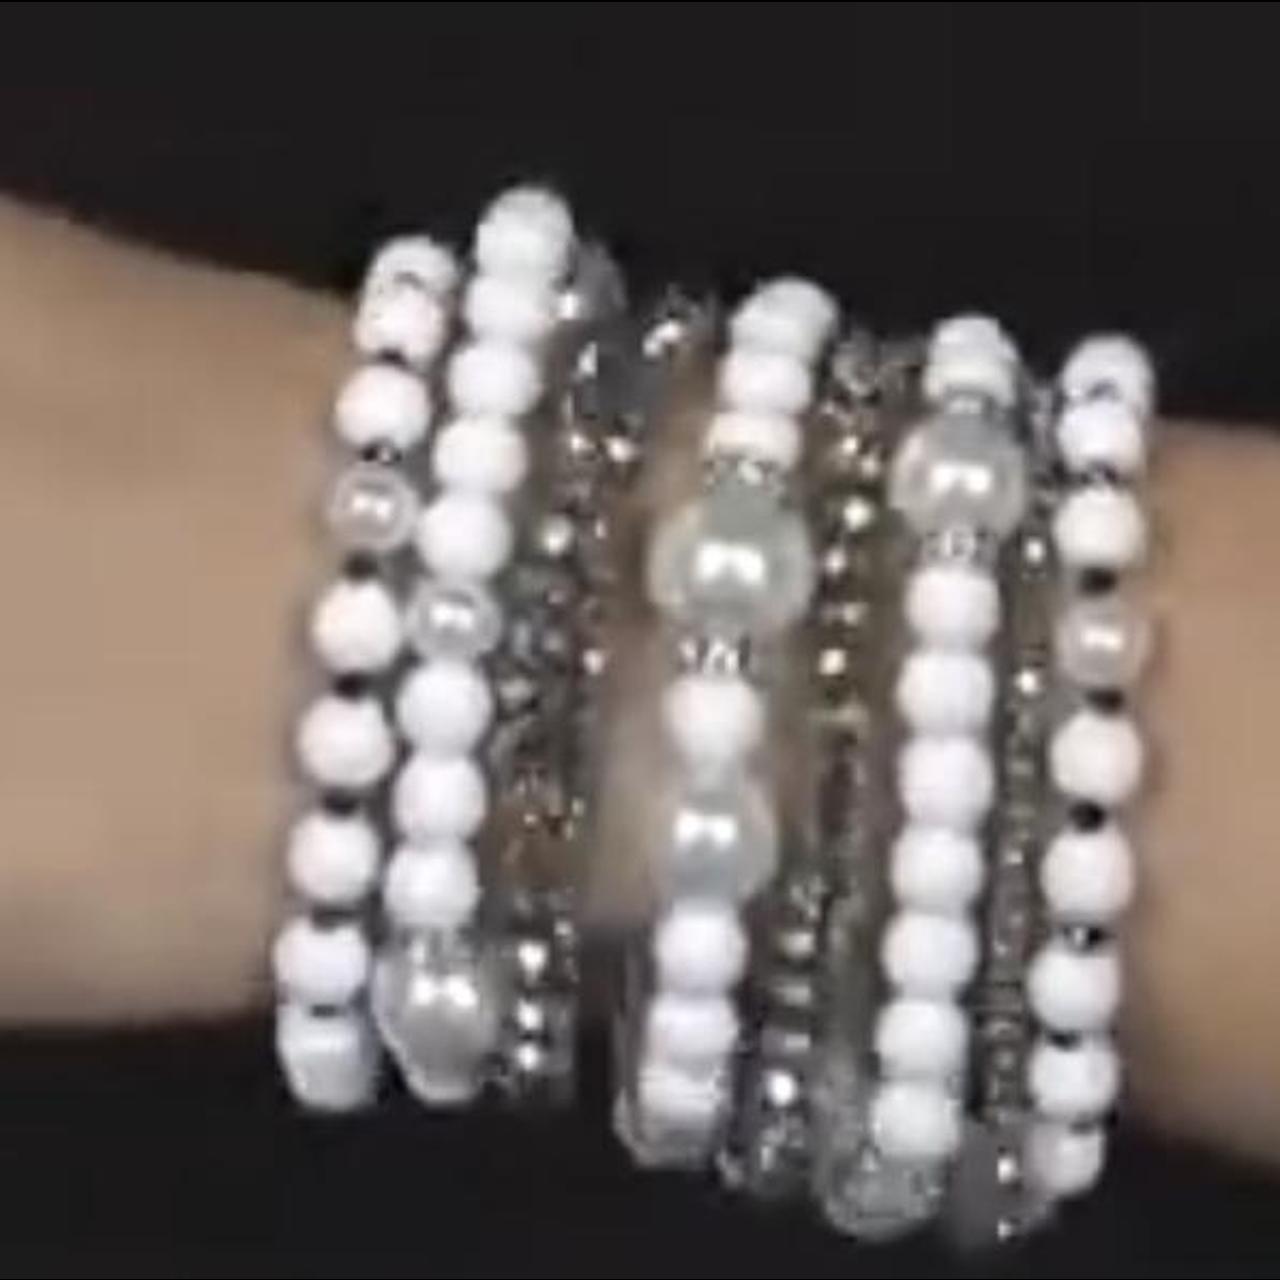 Juicy Couture Pearl Bracelets